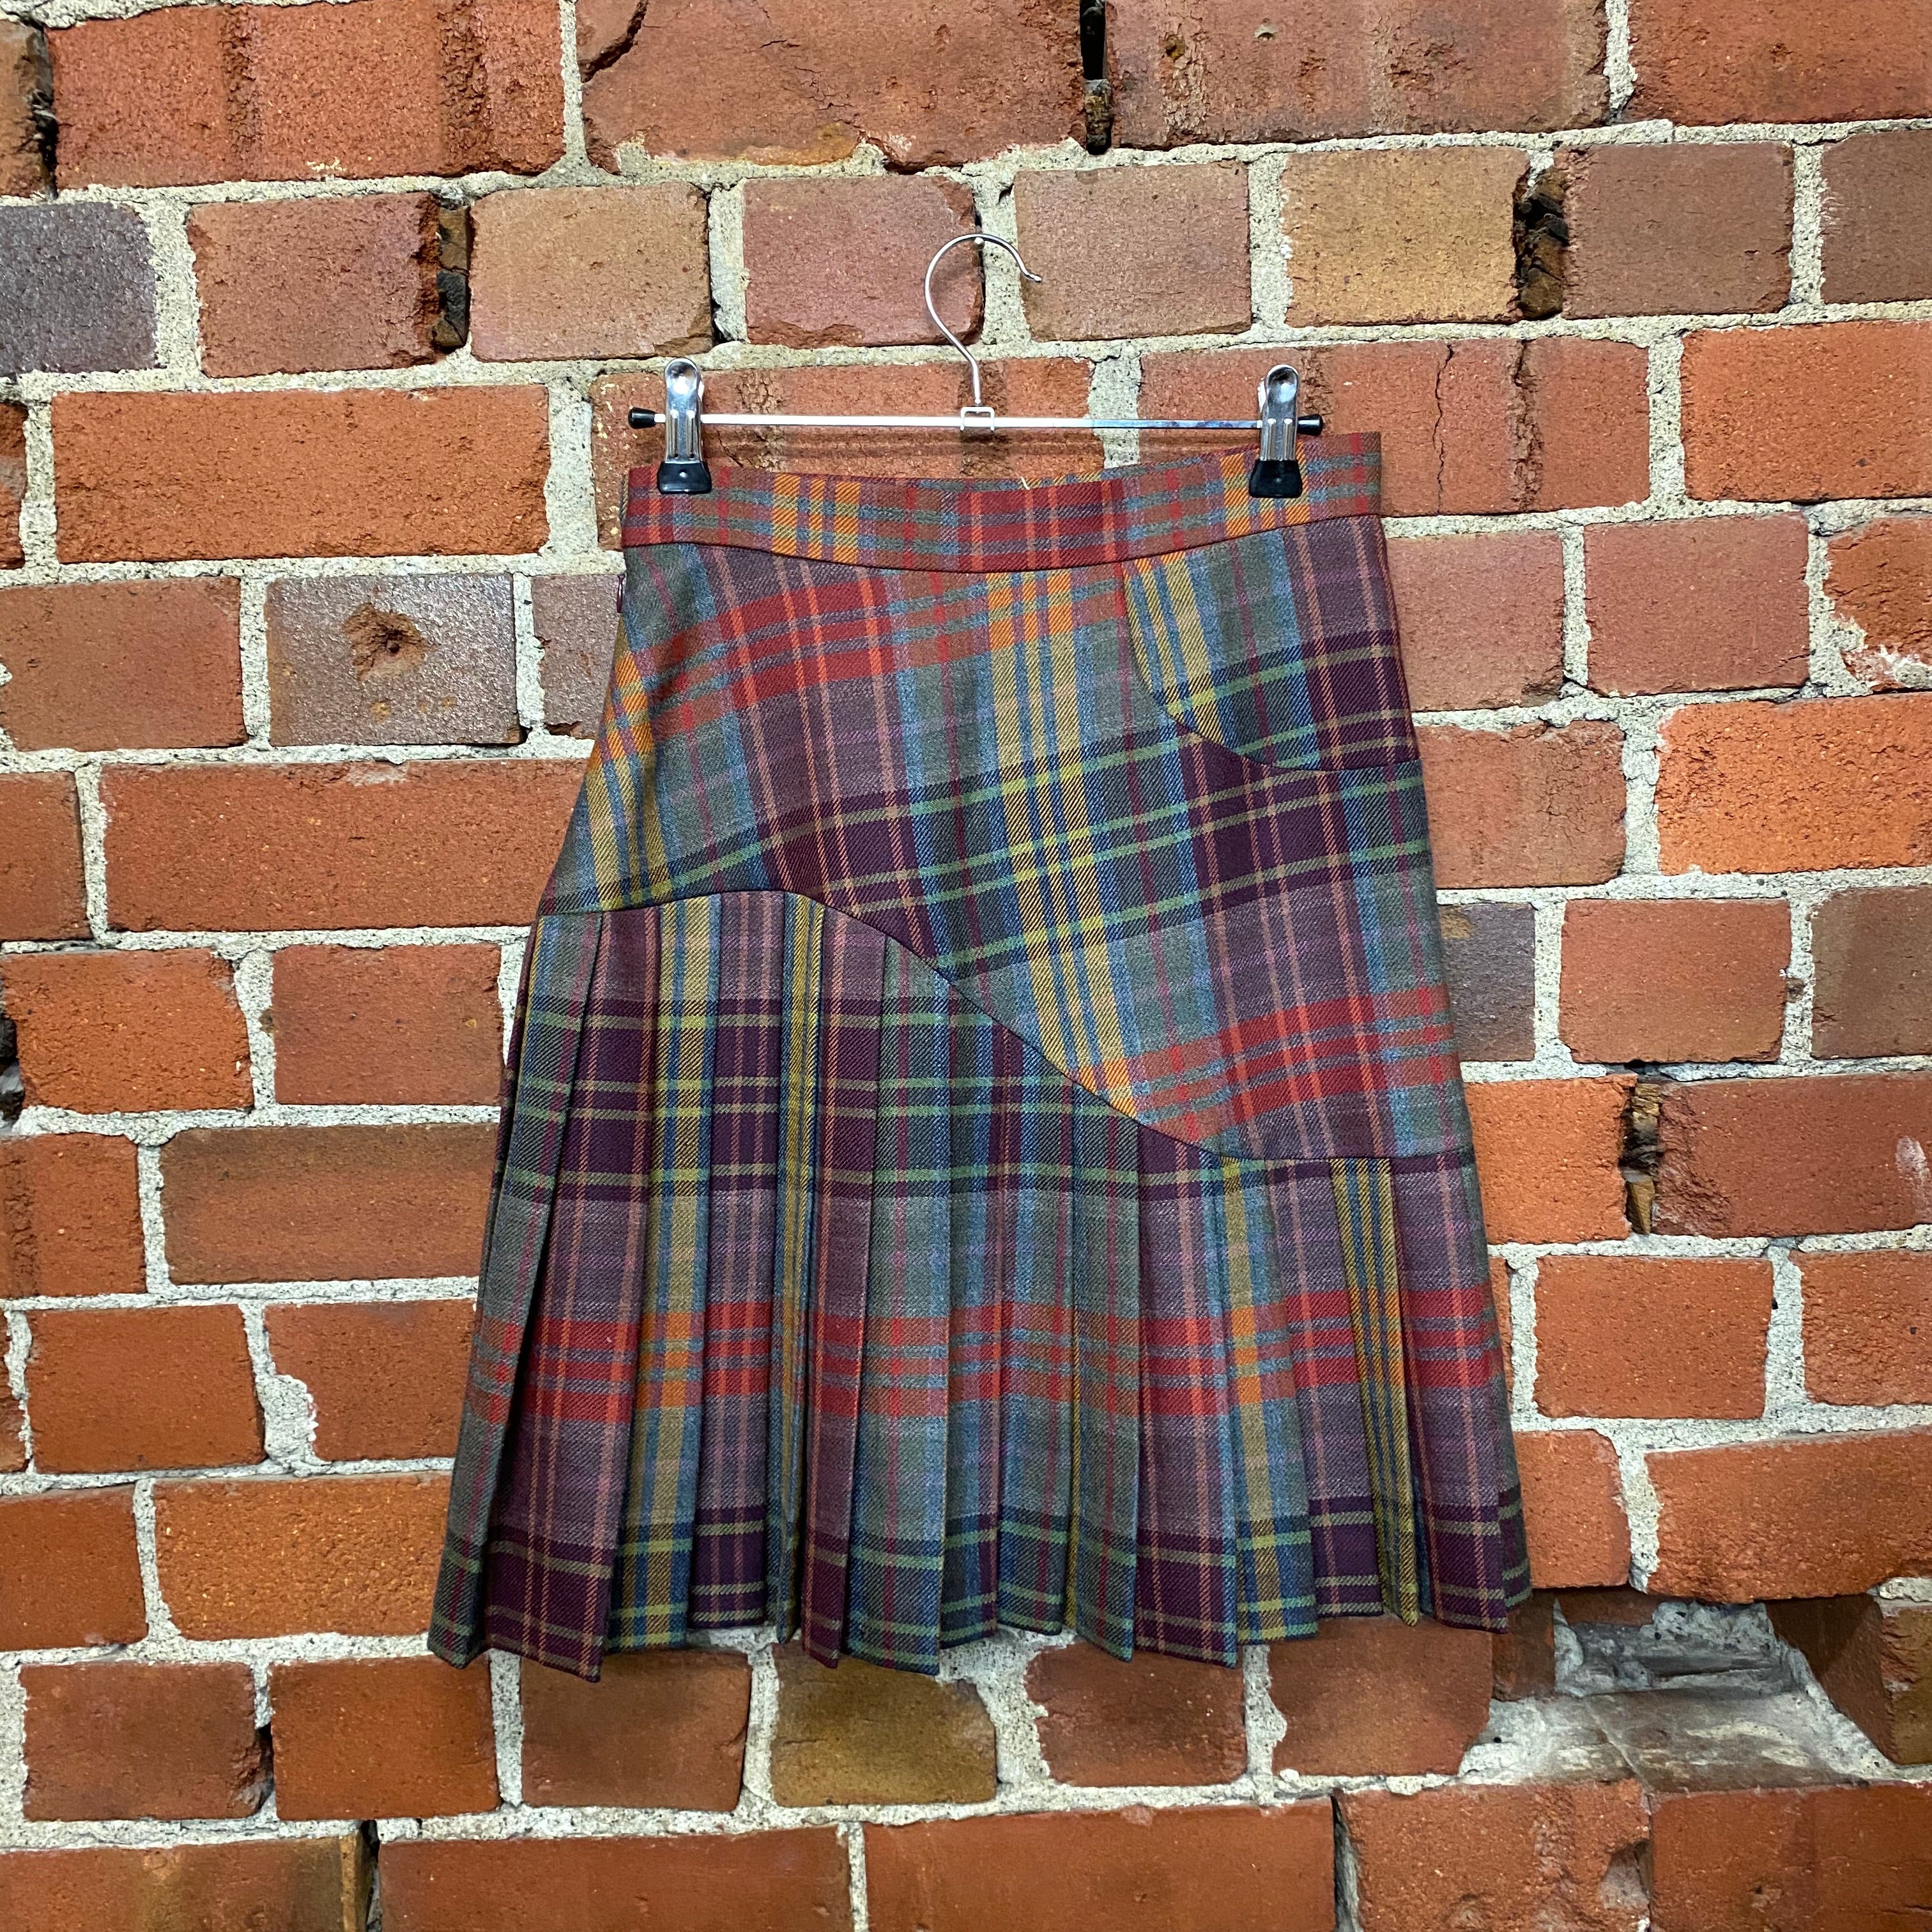 VIVIENNE WESTWOOD 1990s tartan skirt